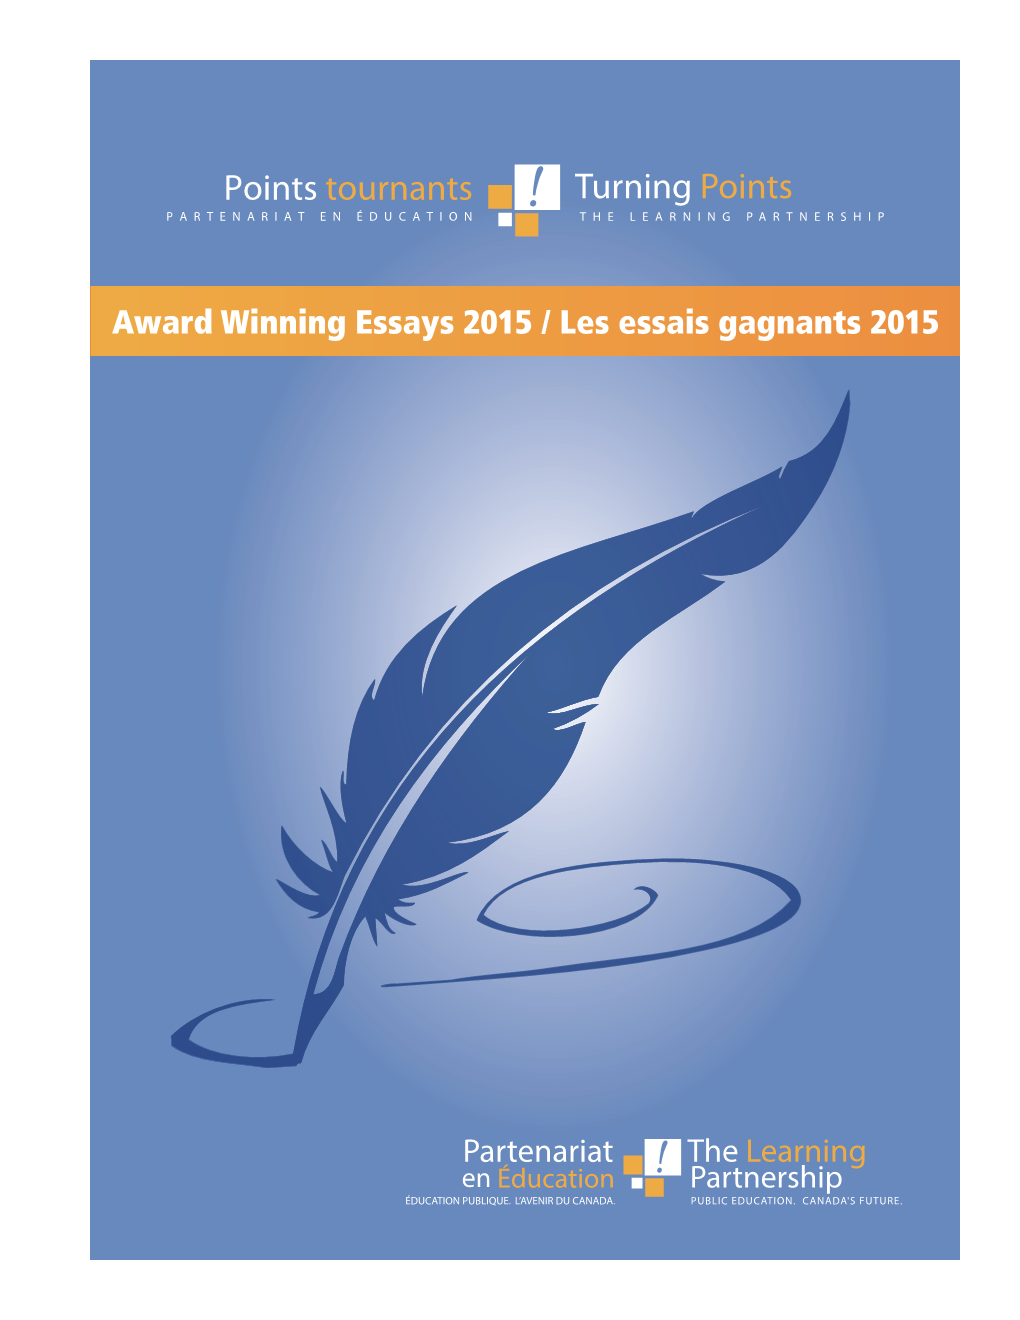 Award Winning Essays 2015 / Les Essais Gagnants 2015 Thelearningpartnership.Ca | Partenariateneducation.Ca